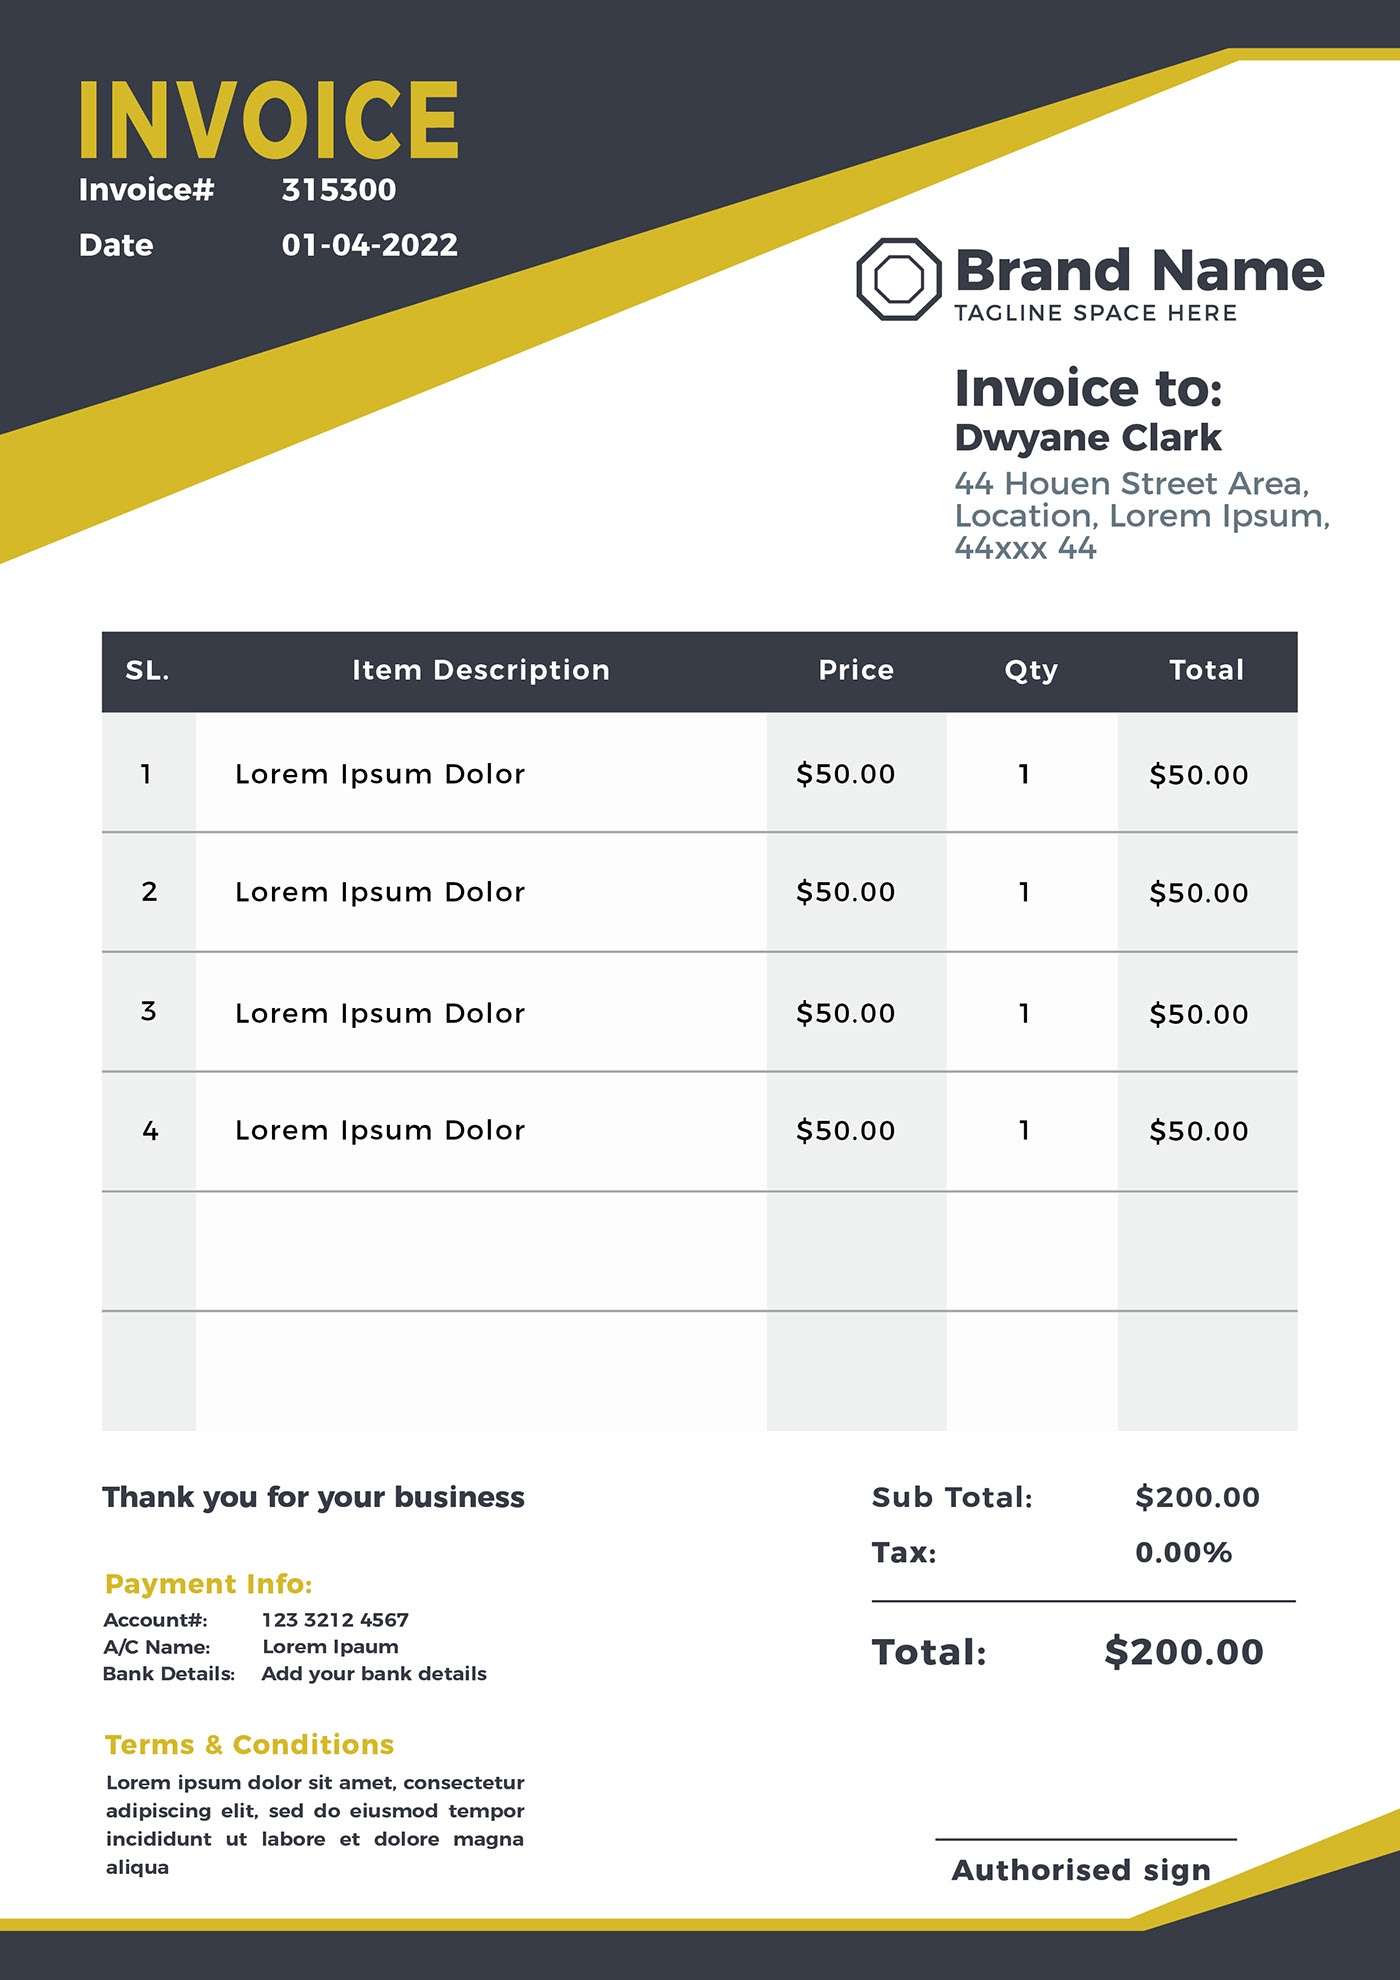 Professional invoice design . on Behance